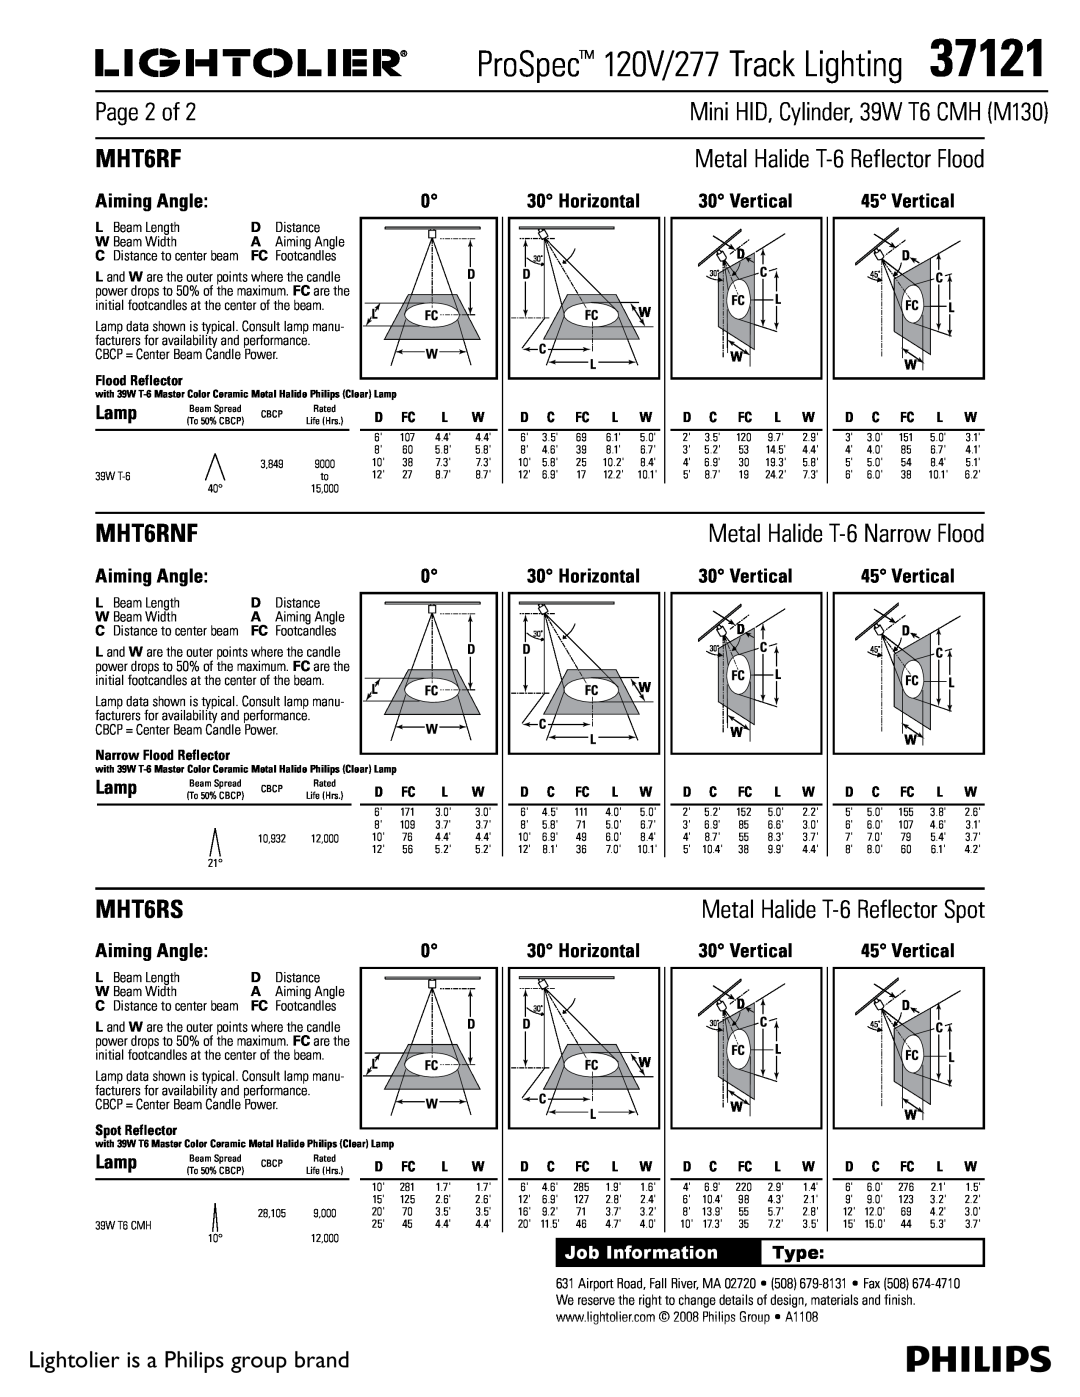 Lightolier 37121 manual Metal Halide T-6Reflector Flood, Metal Halide T-6Narrow Flood, Page 2 of, MHT6RF, MHT6RNF, MHT6RS 